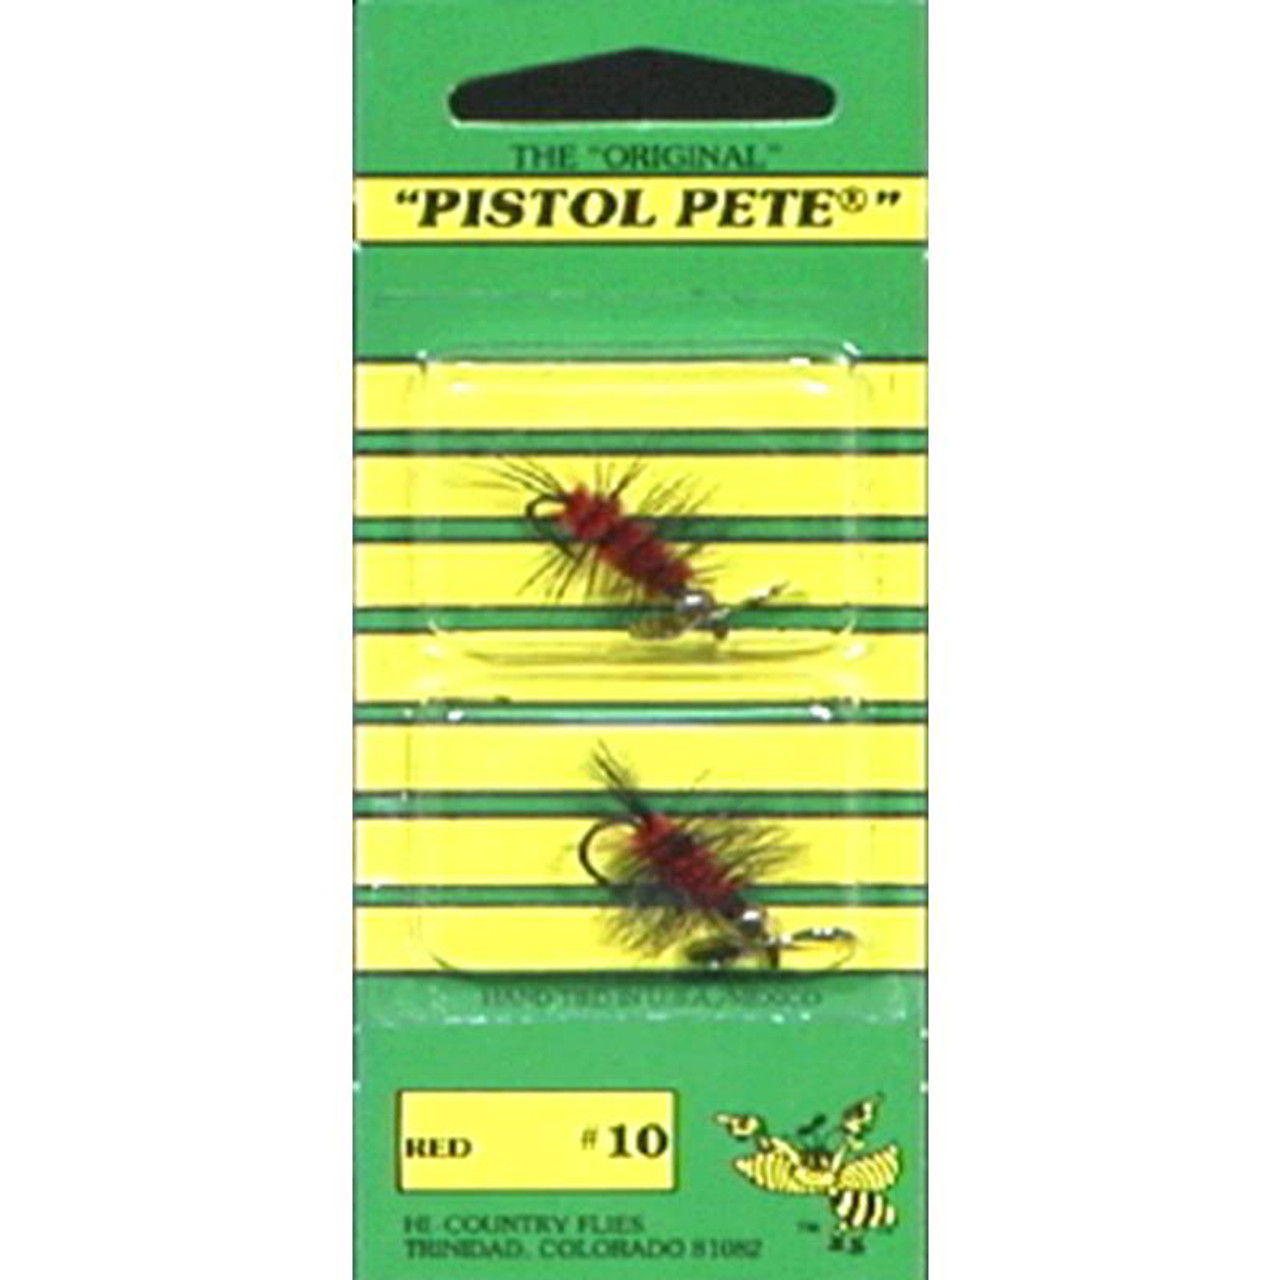 Pistol Pete - Hi-Country Flies Pistol Pete Size 10 - Red